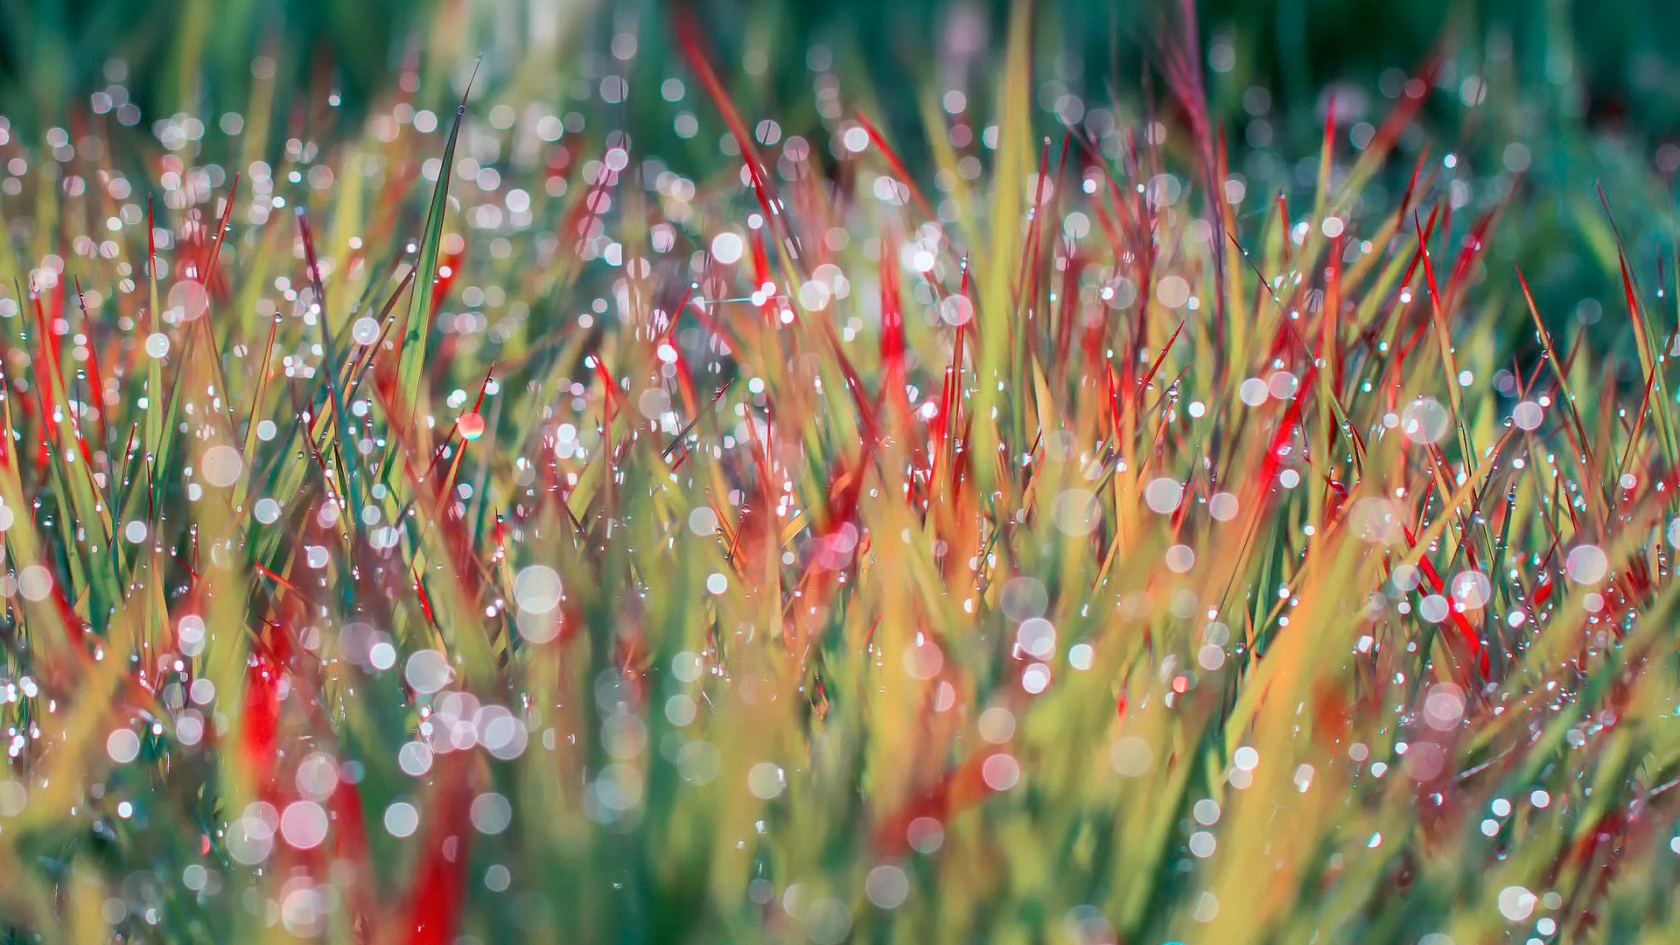 Morning Dew on Grass for 1680 x 945 HDTV resolution